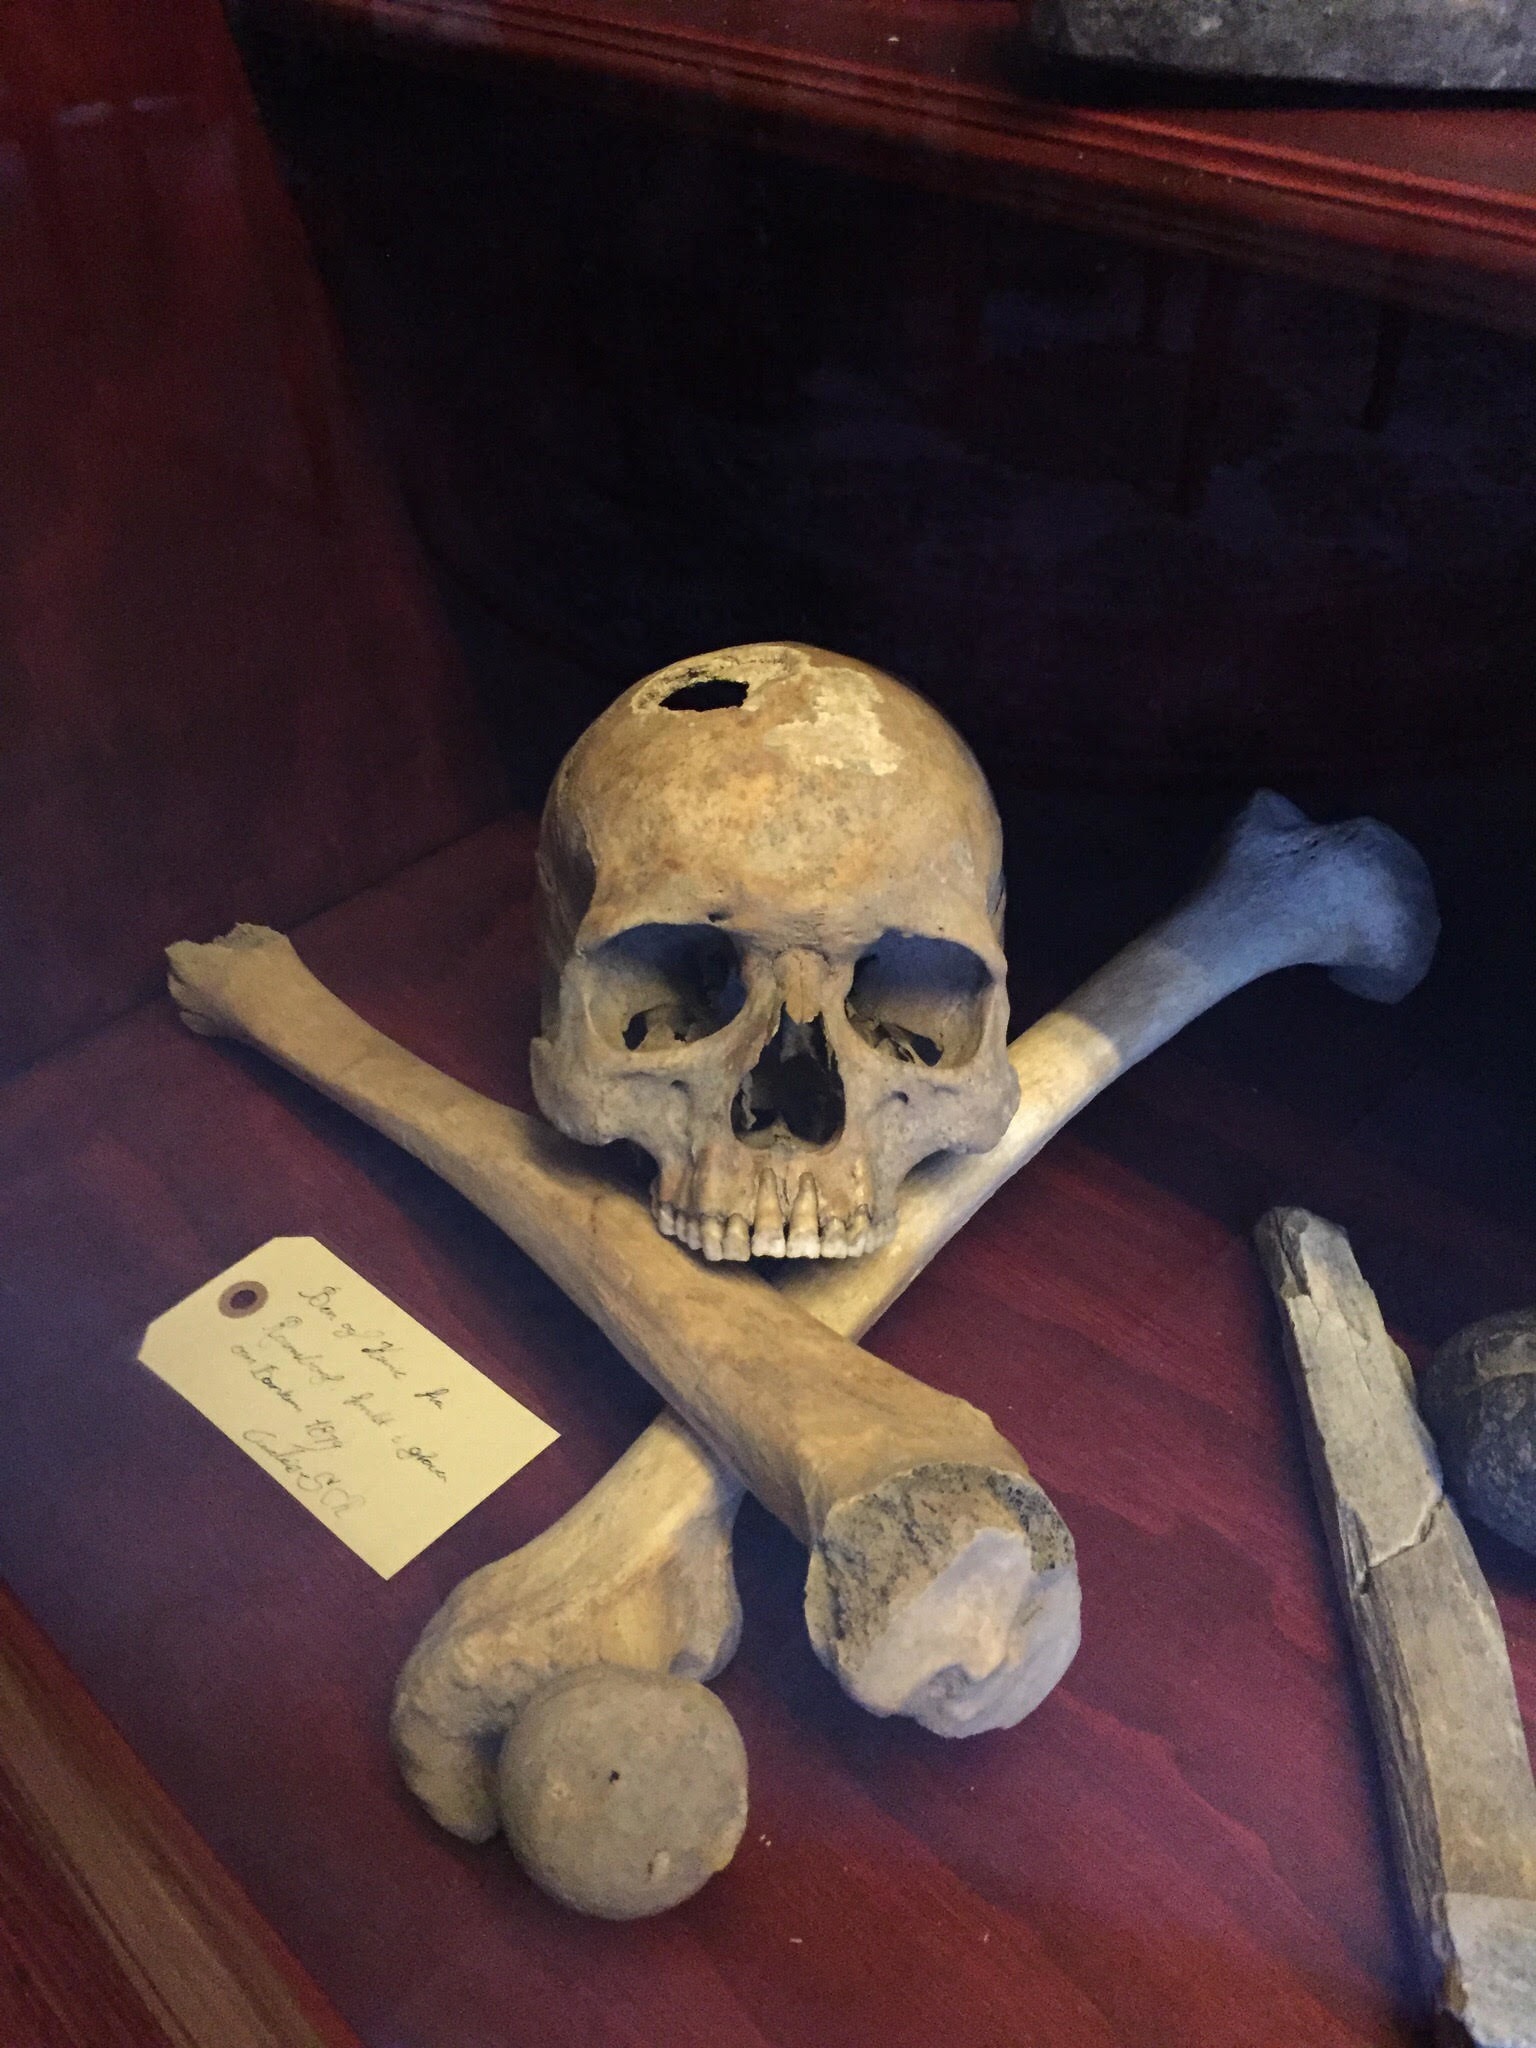 A skull and two crossed leg bones on a purple velvet cushion.